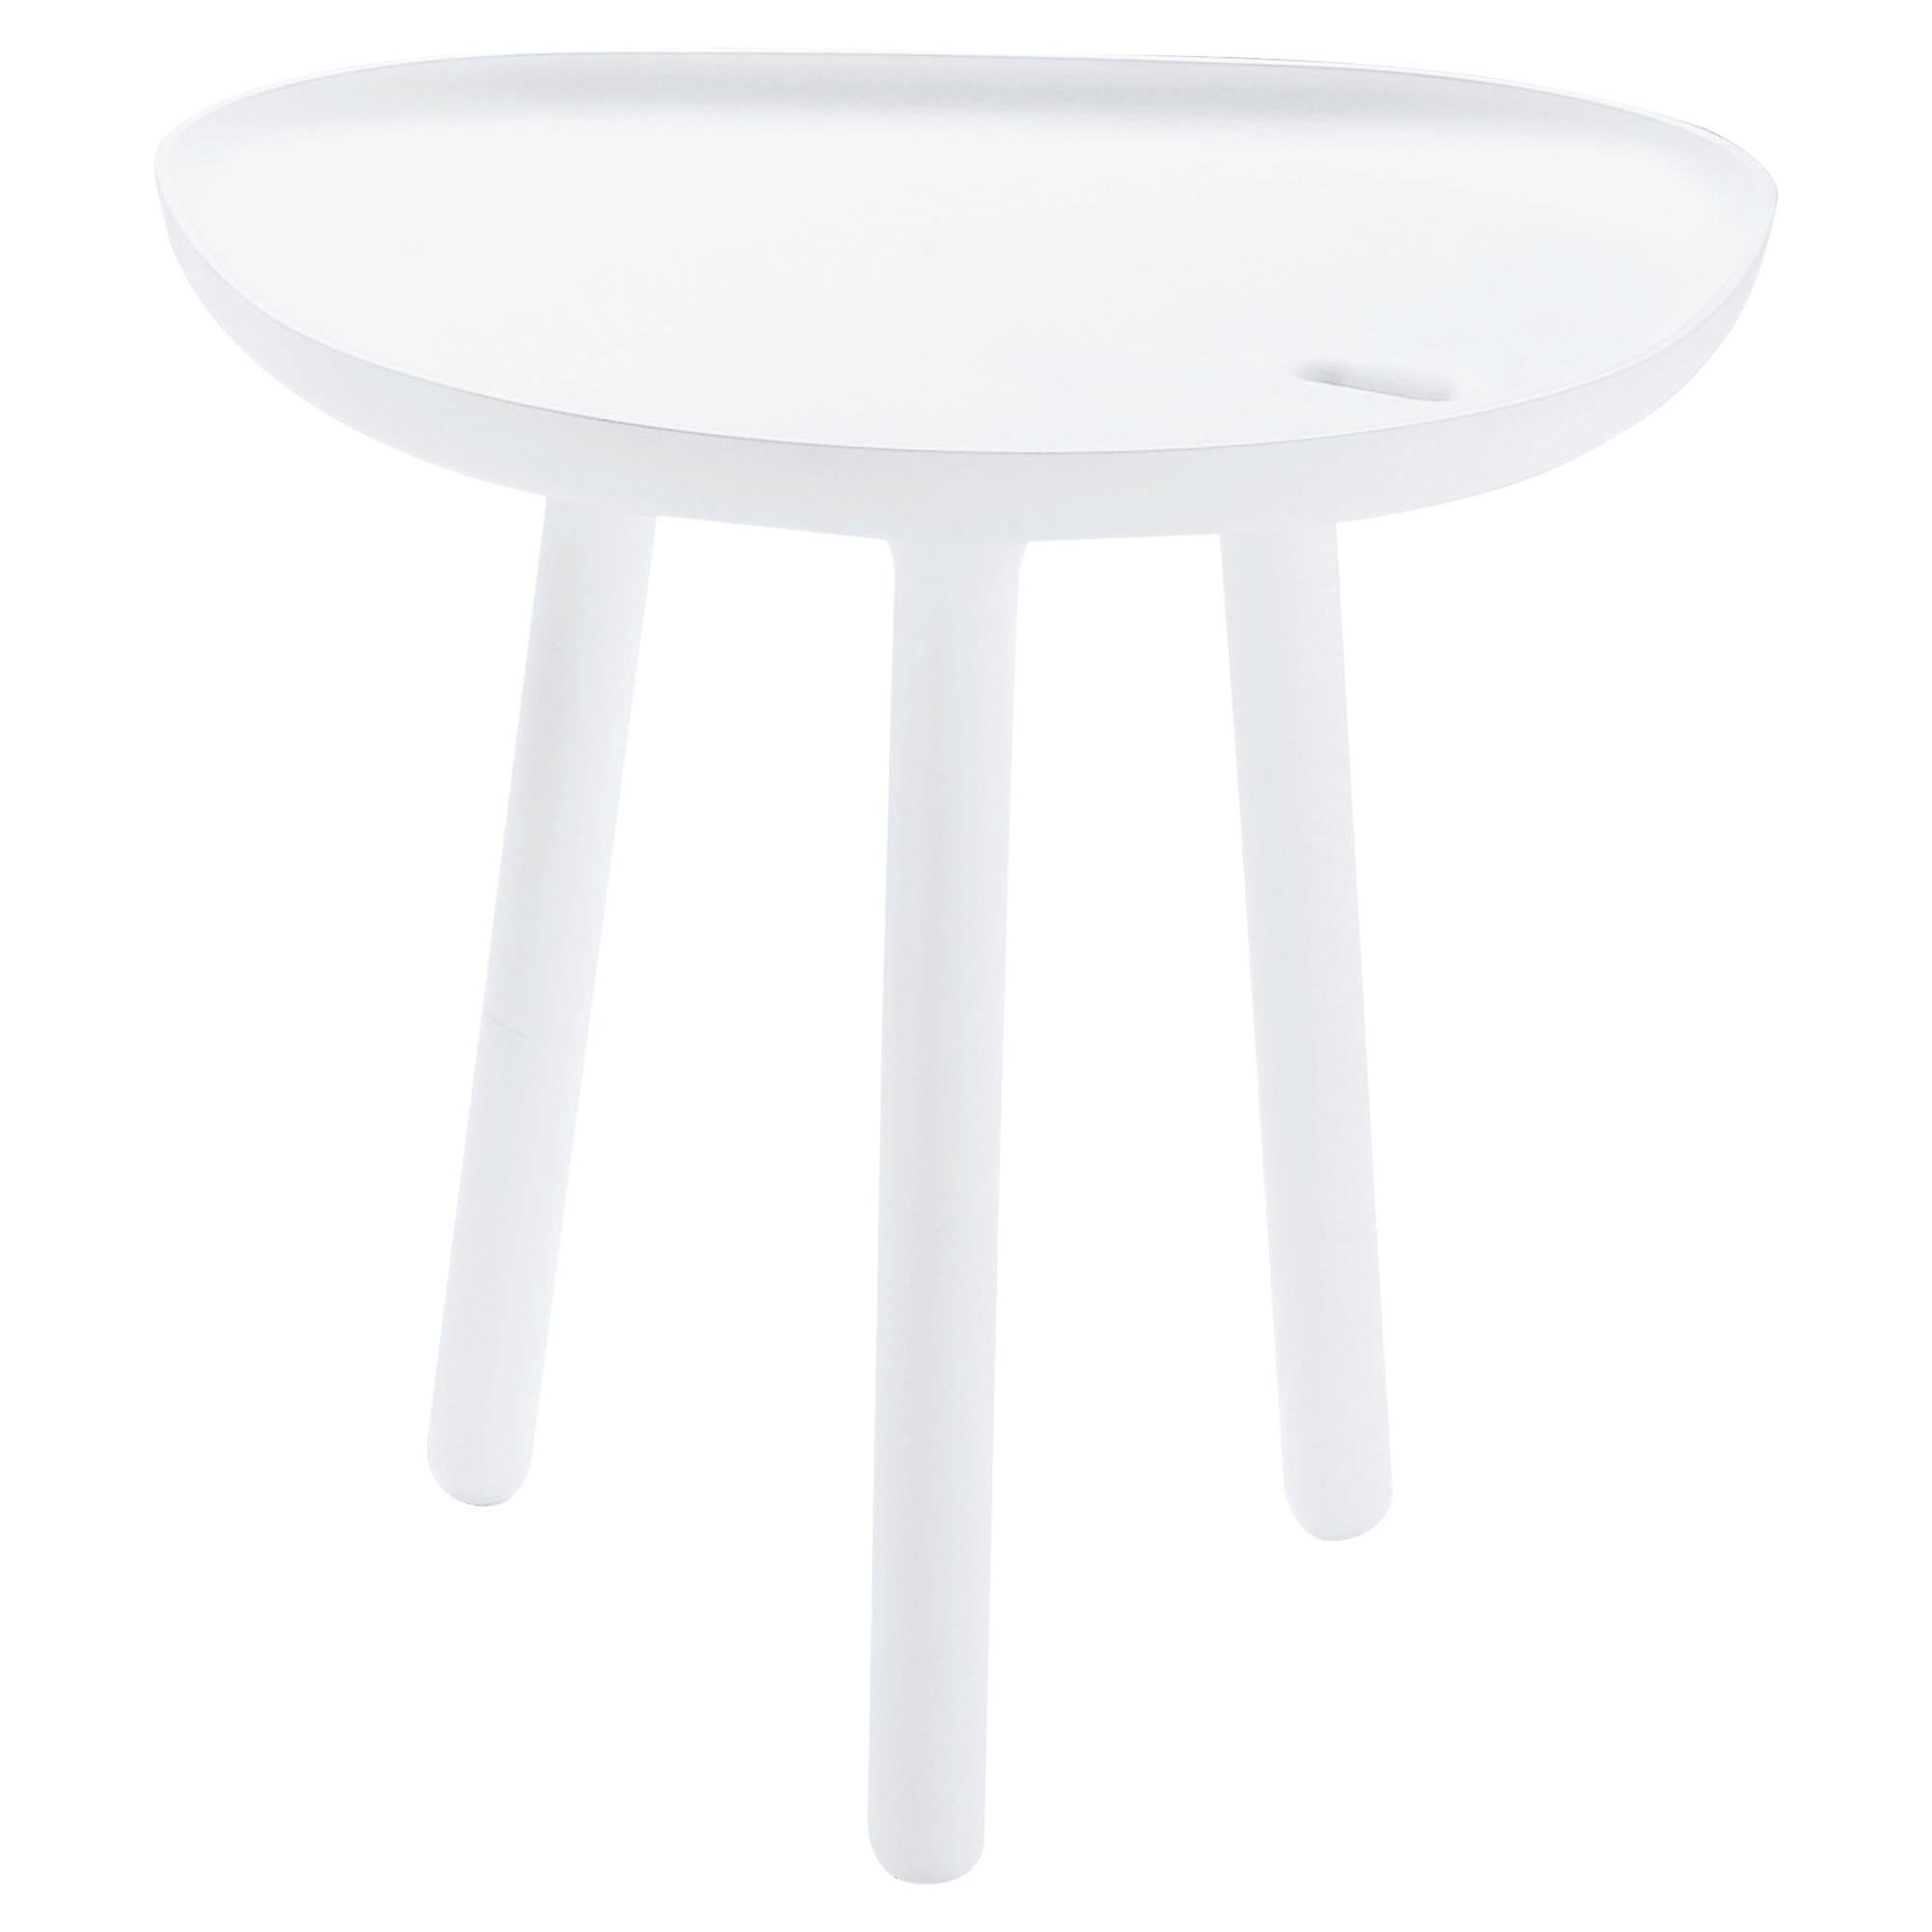 Zanotta Loto Small Table in White Acrylic Resin by Ludovica+Roberto Palomba